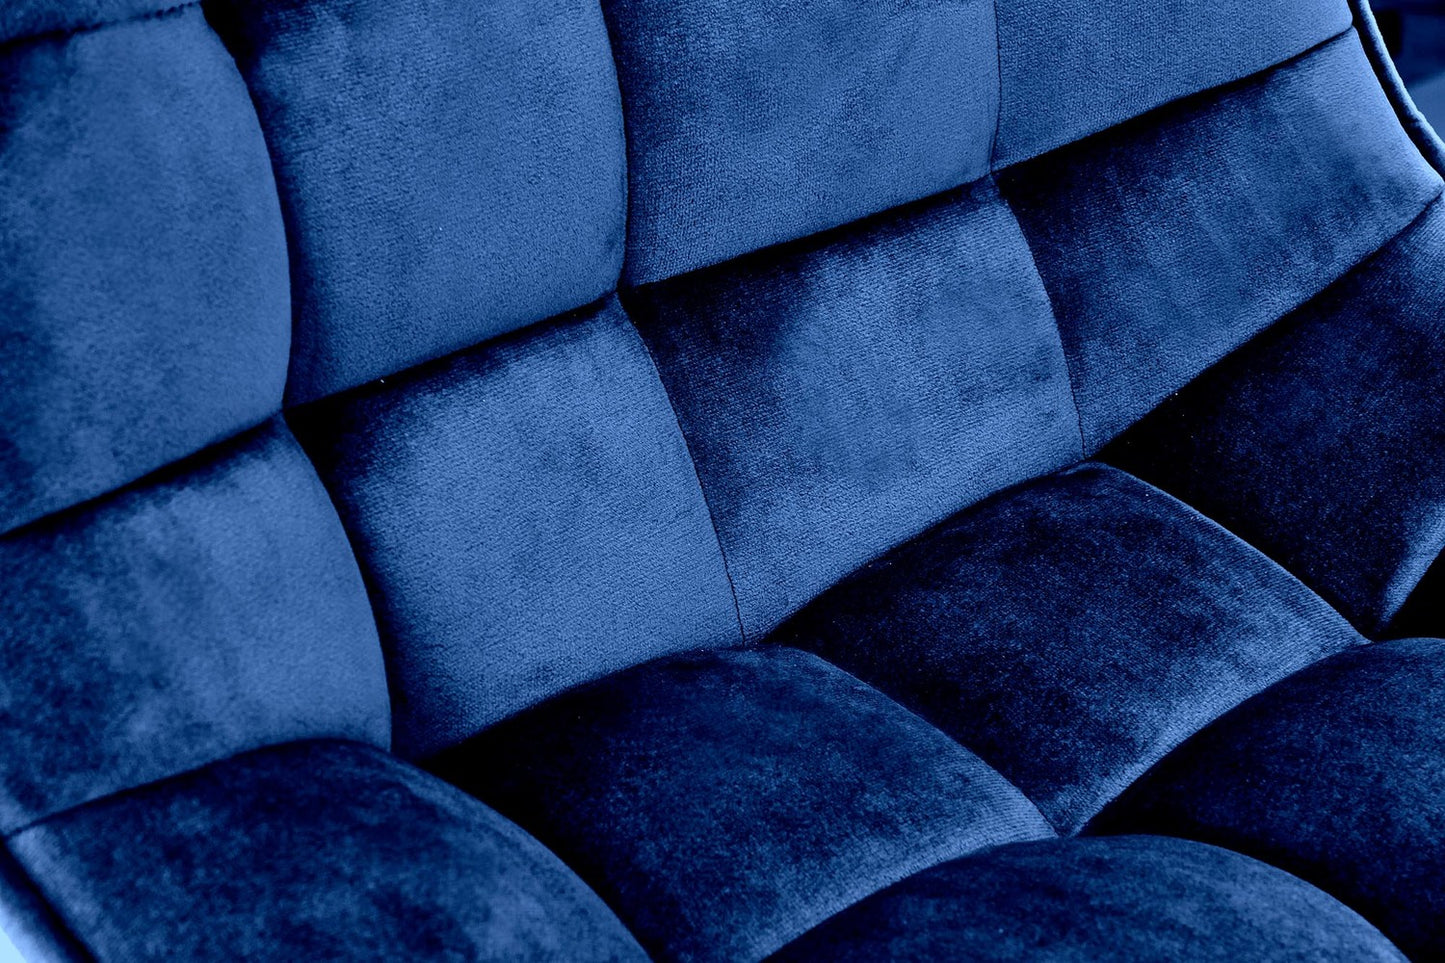 NW krēsls tumši zils 43/44/84-106/62-84 cm - N1 Home